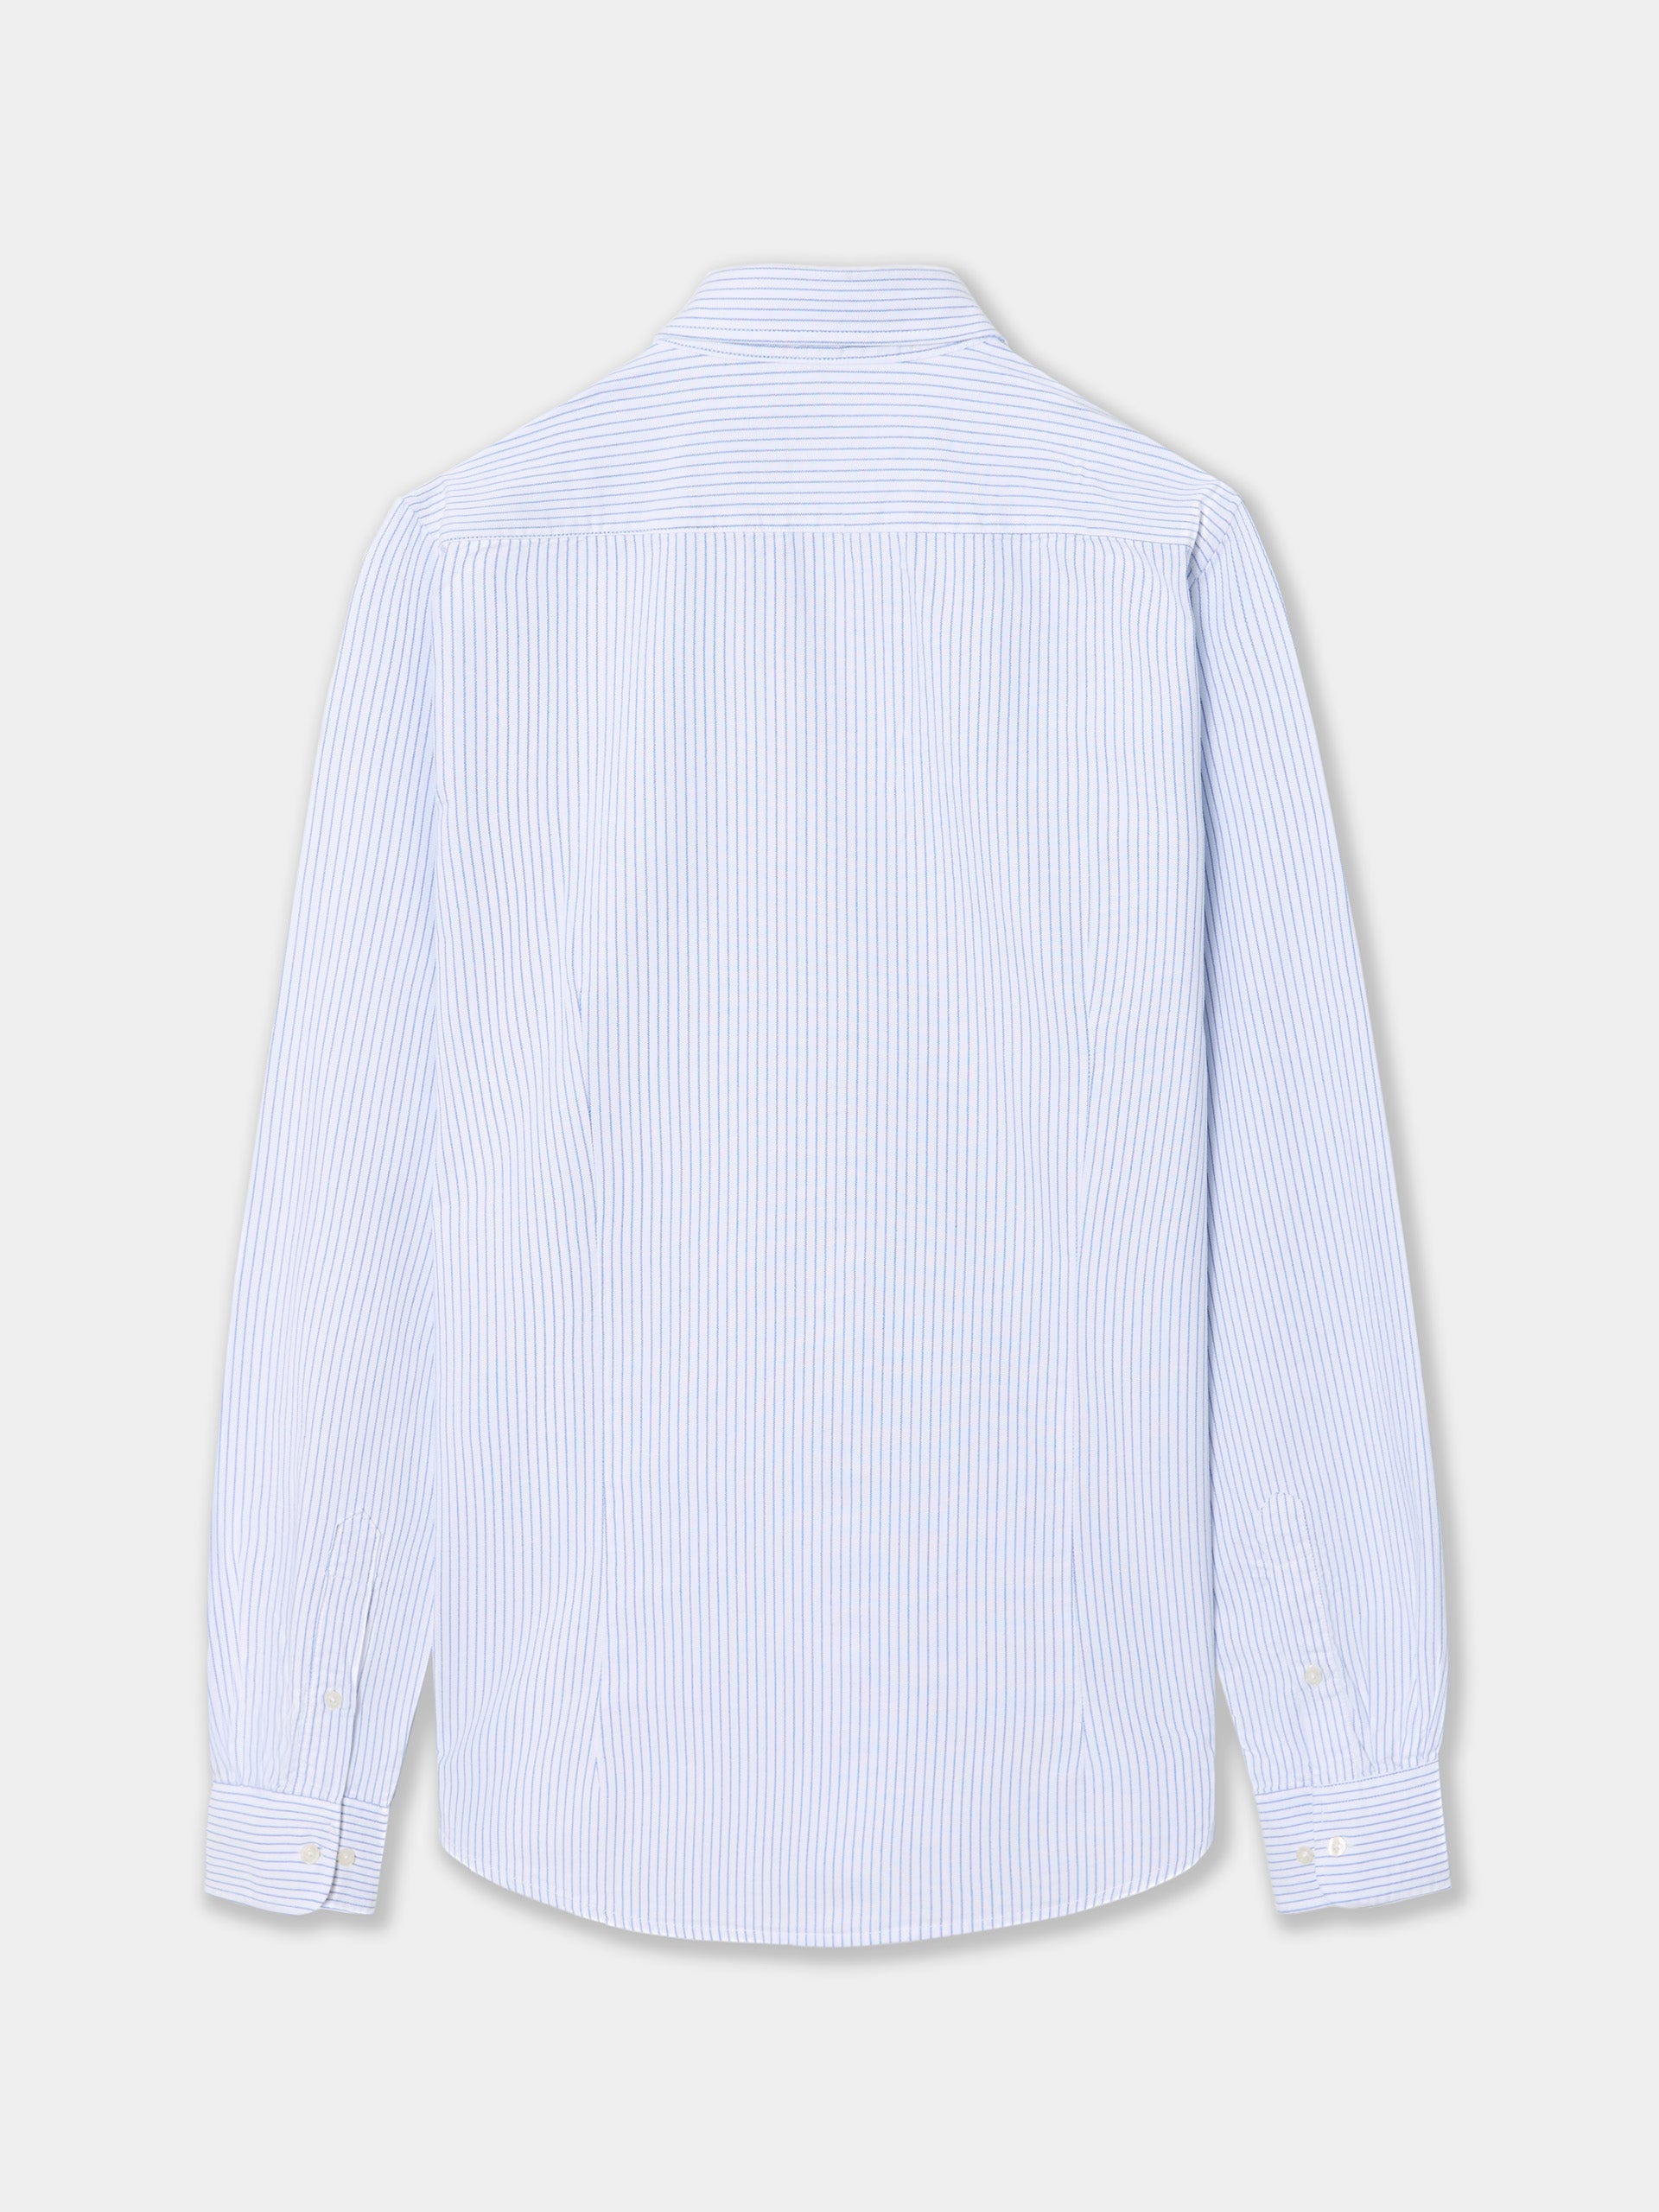 Camisa sport oxford raya fina azul blanca